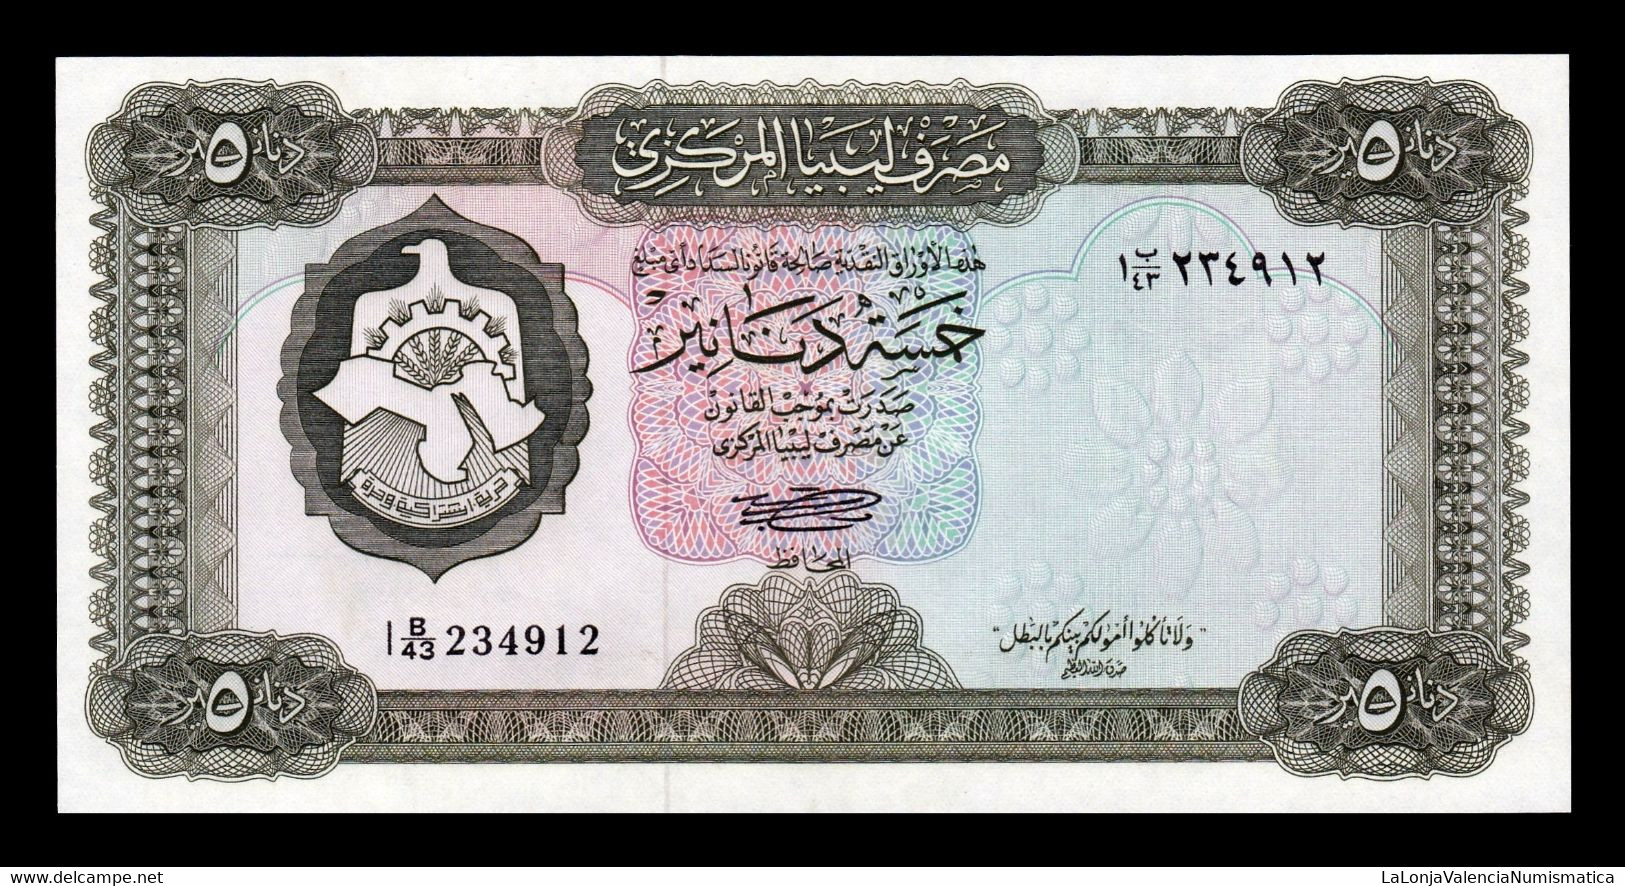 Libia Libya 5 Dinars 1972 Pick 36b SC UNC - Libya